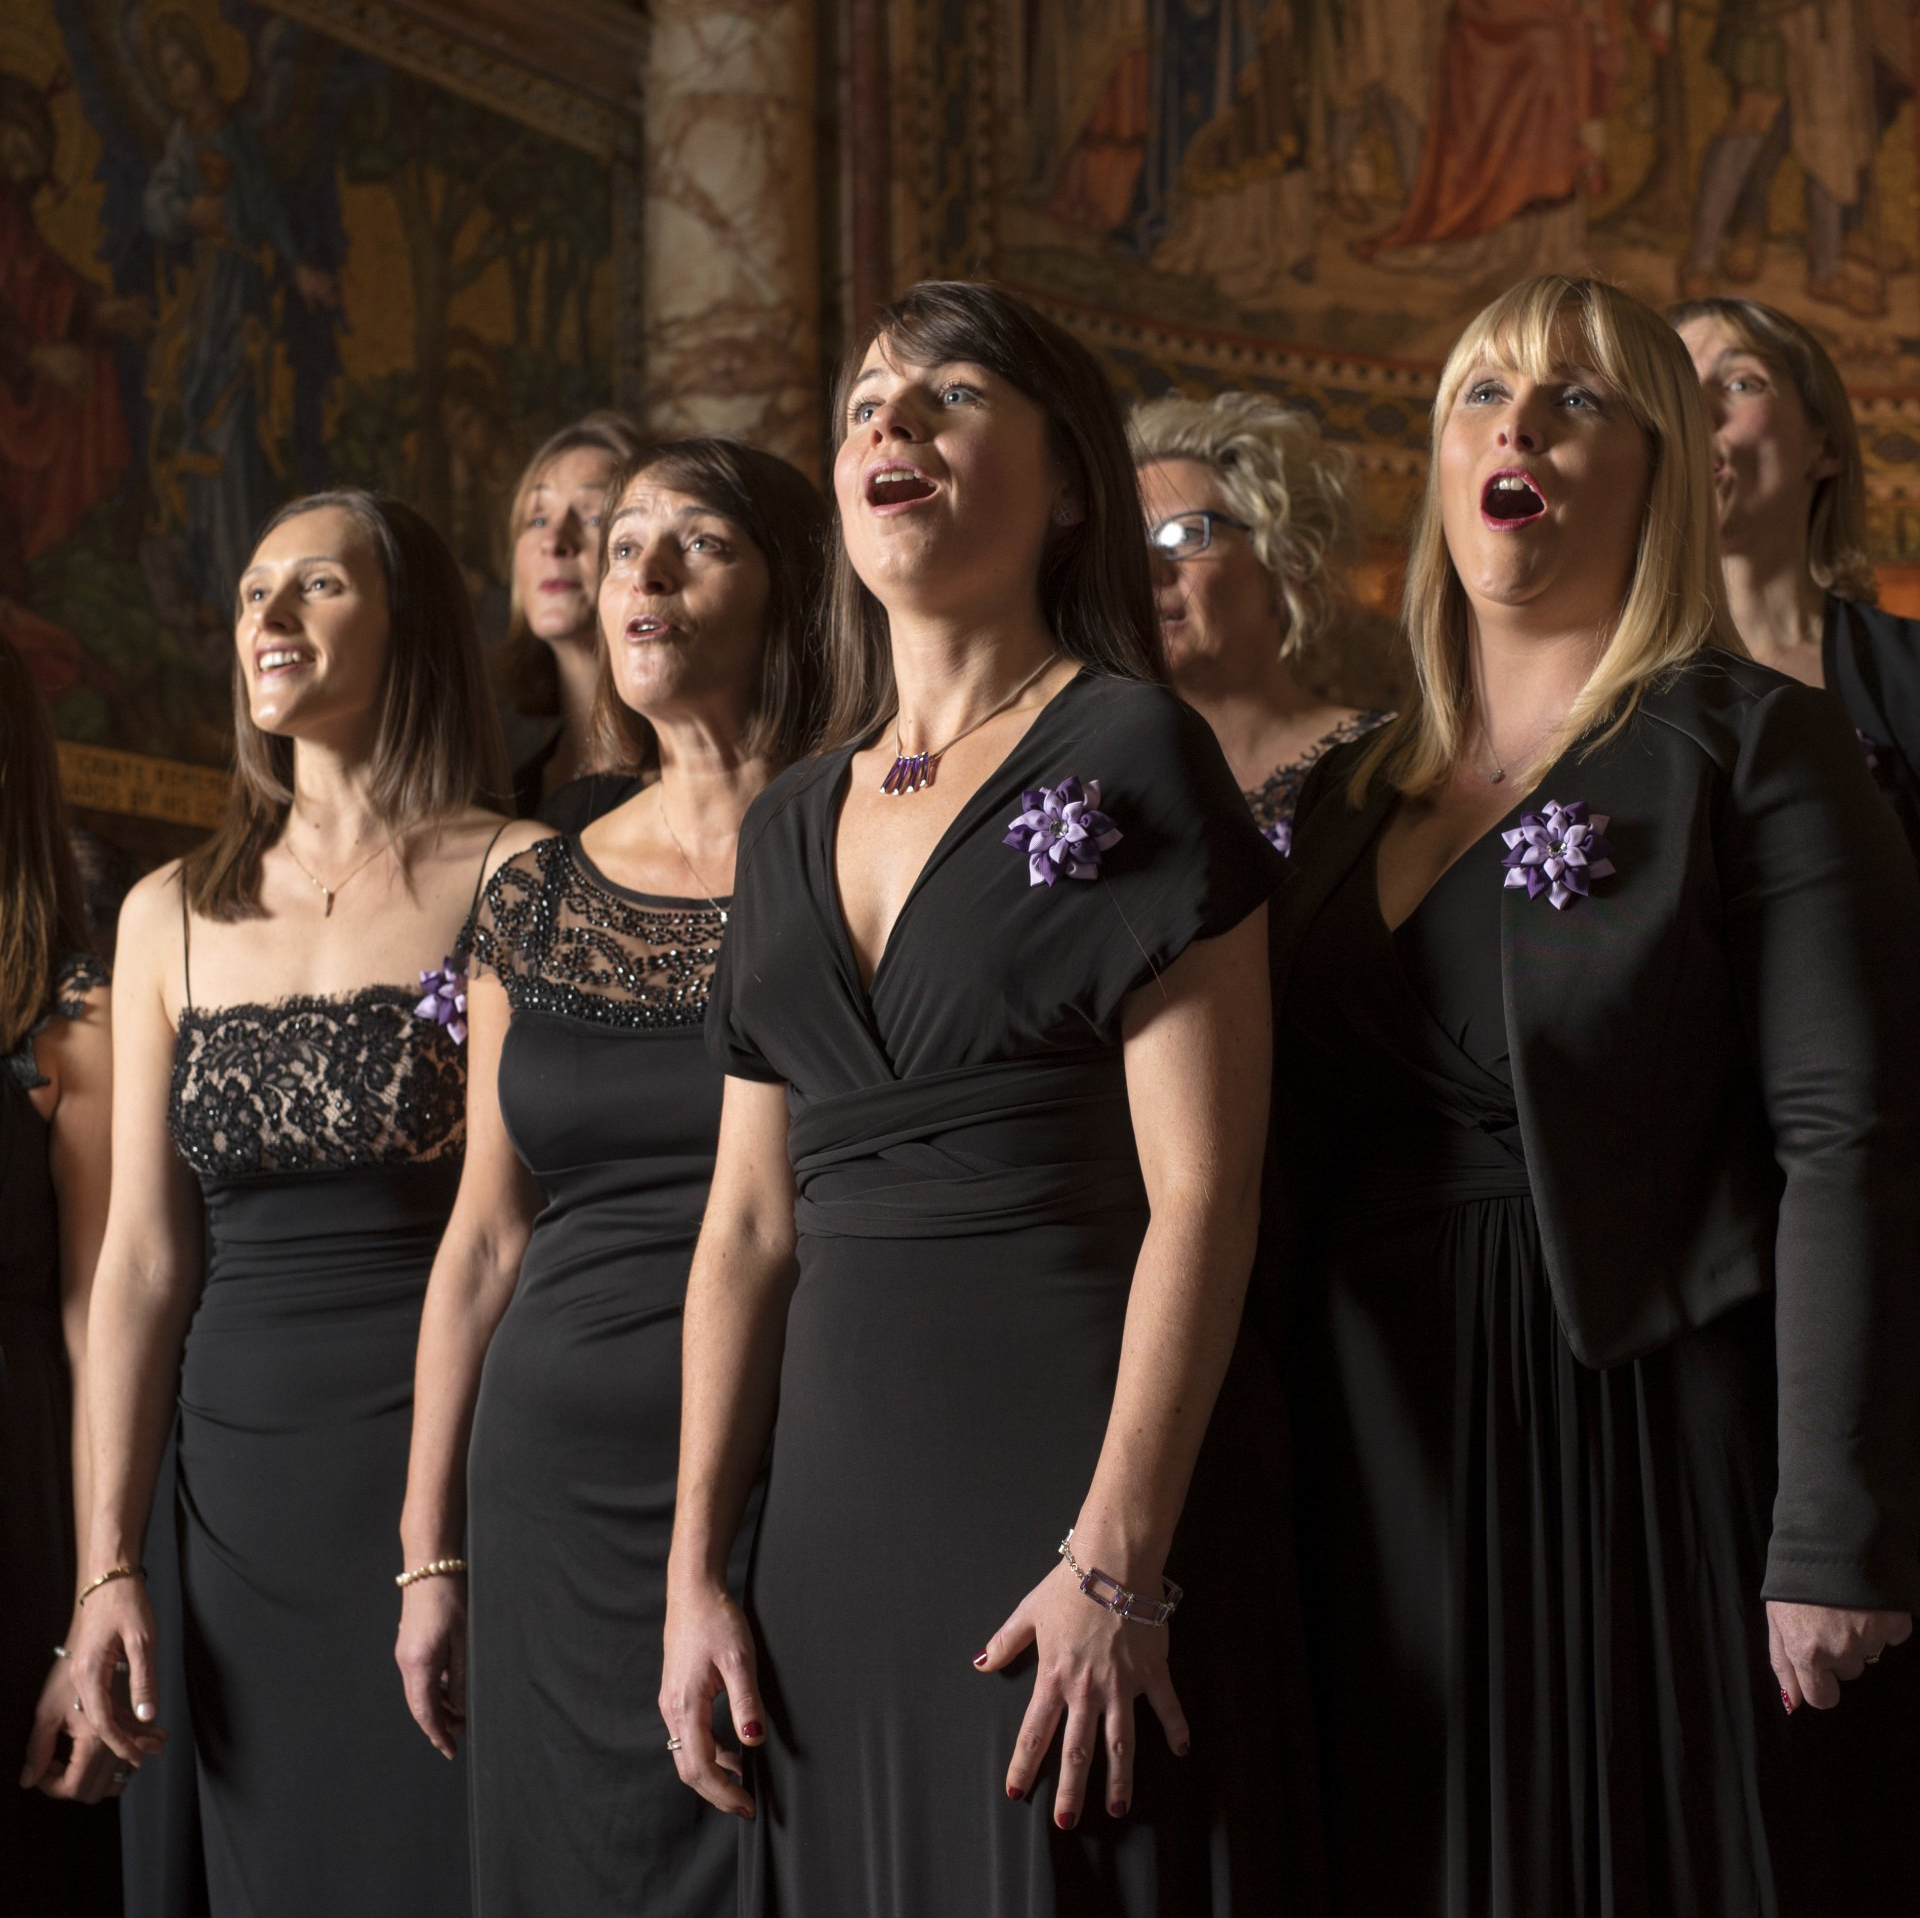 Military wives choir singing